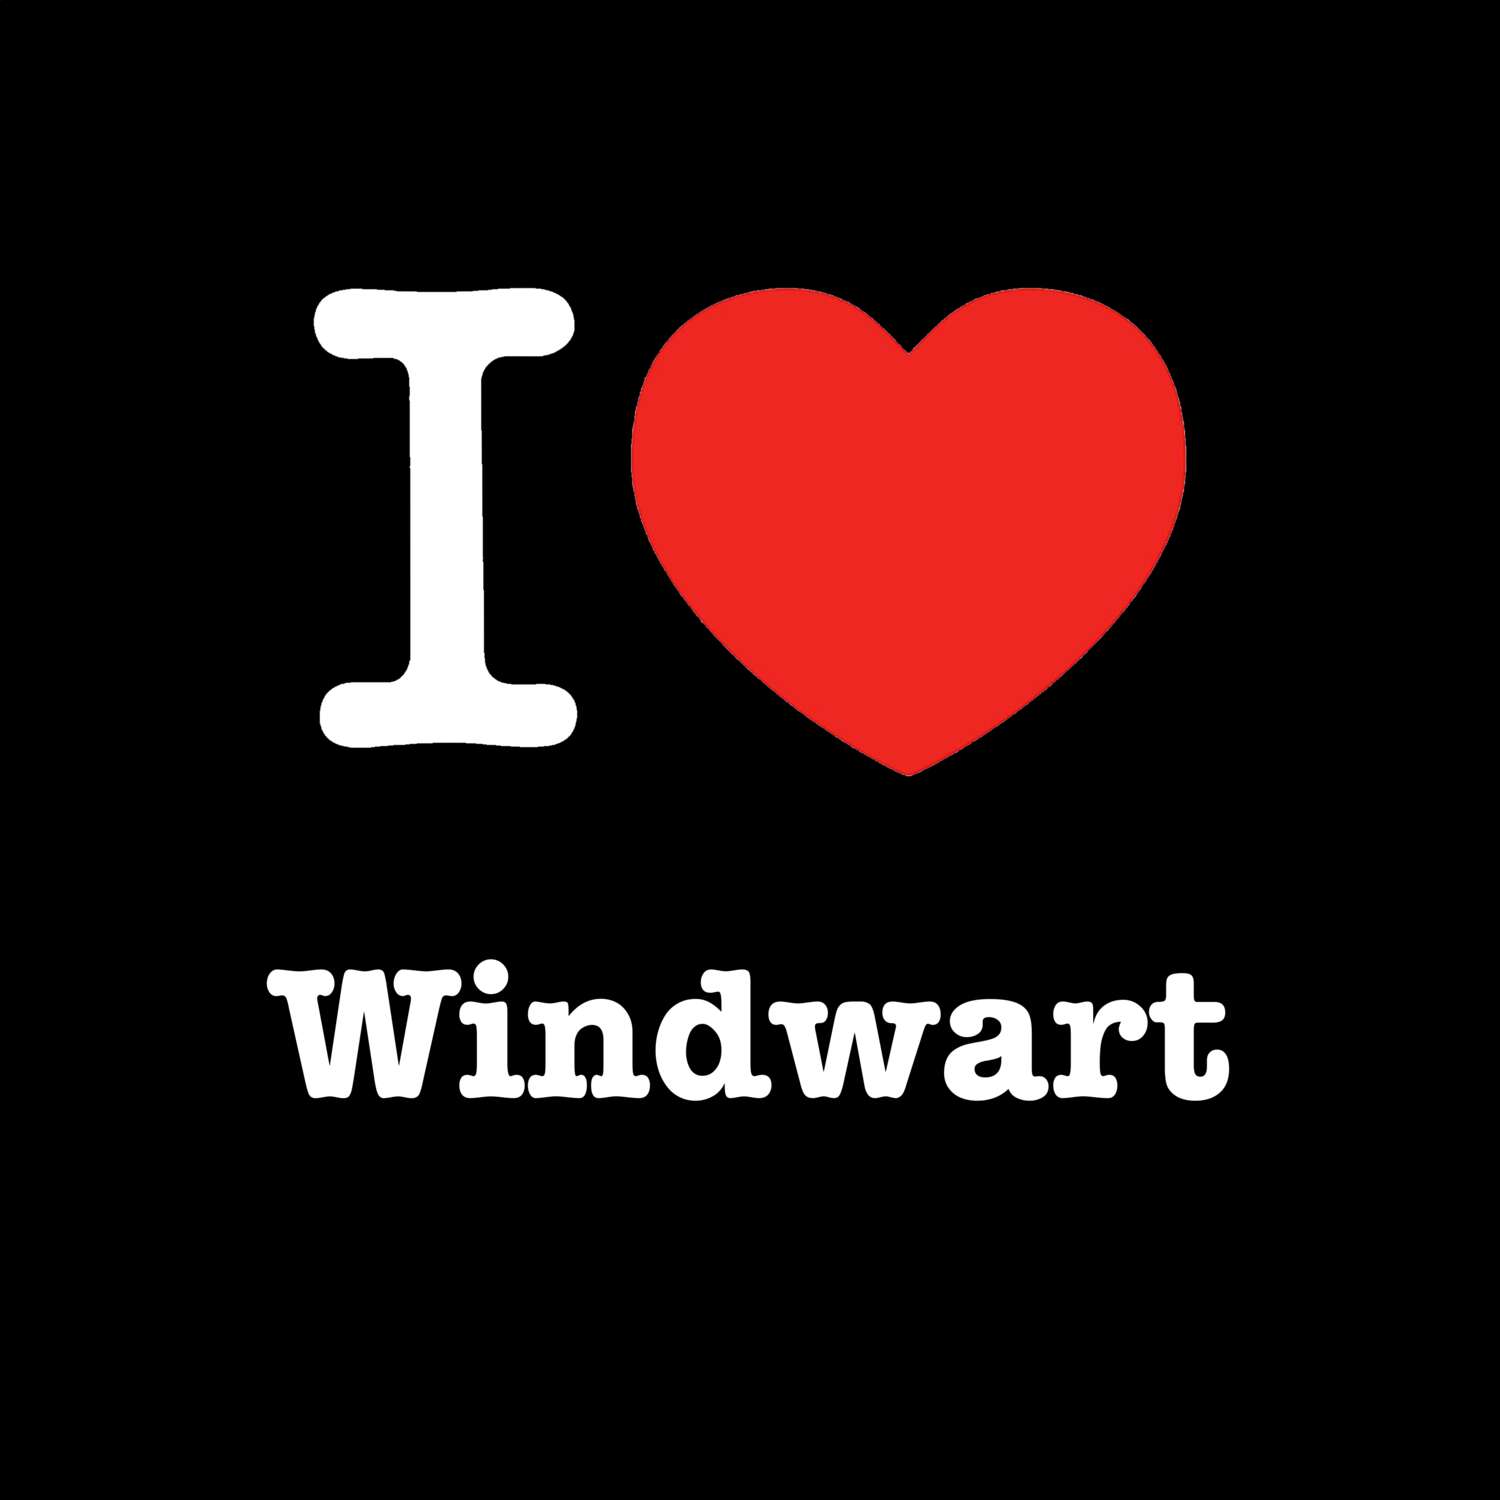 Windwart T-Shirt »I love«